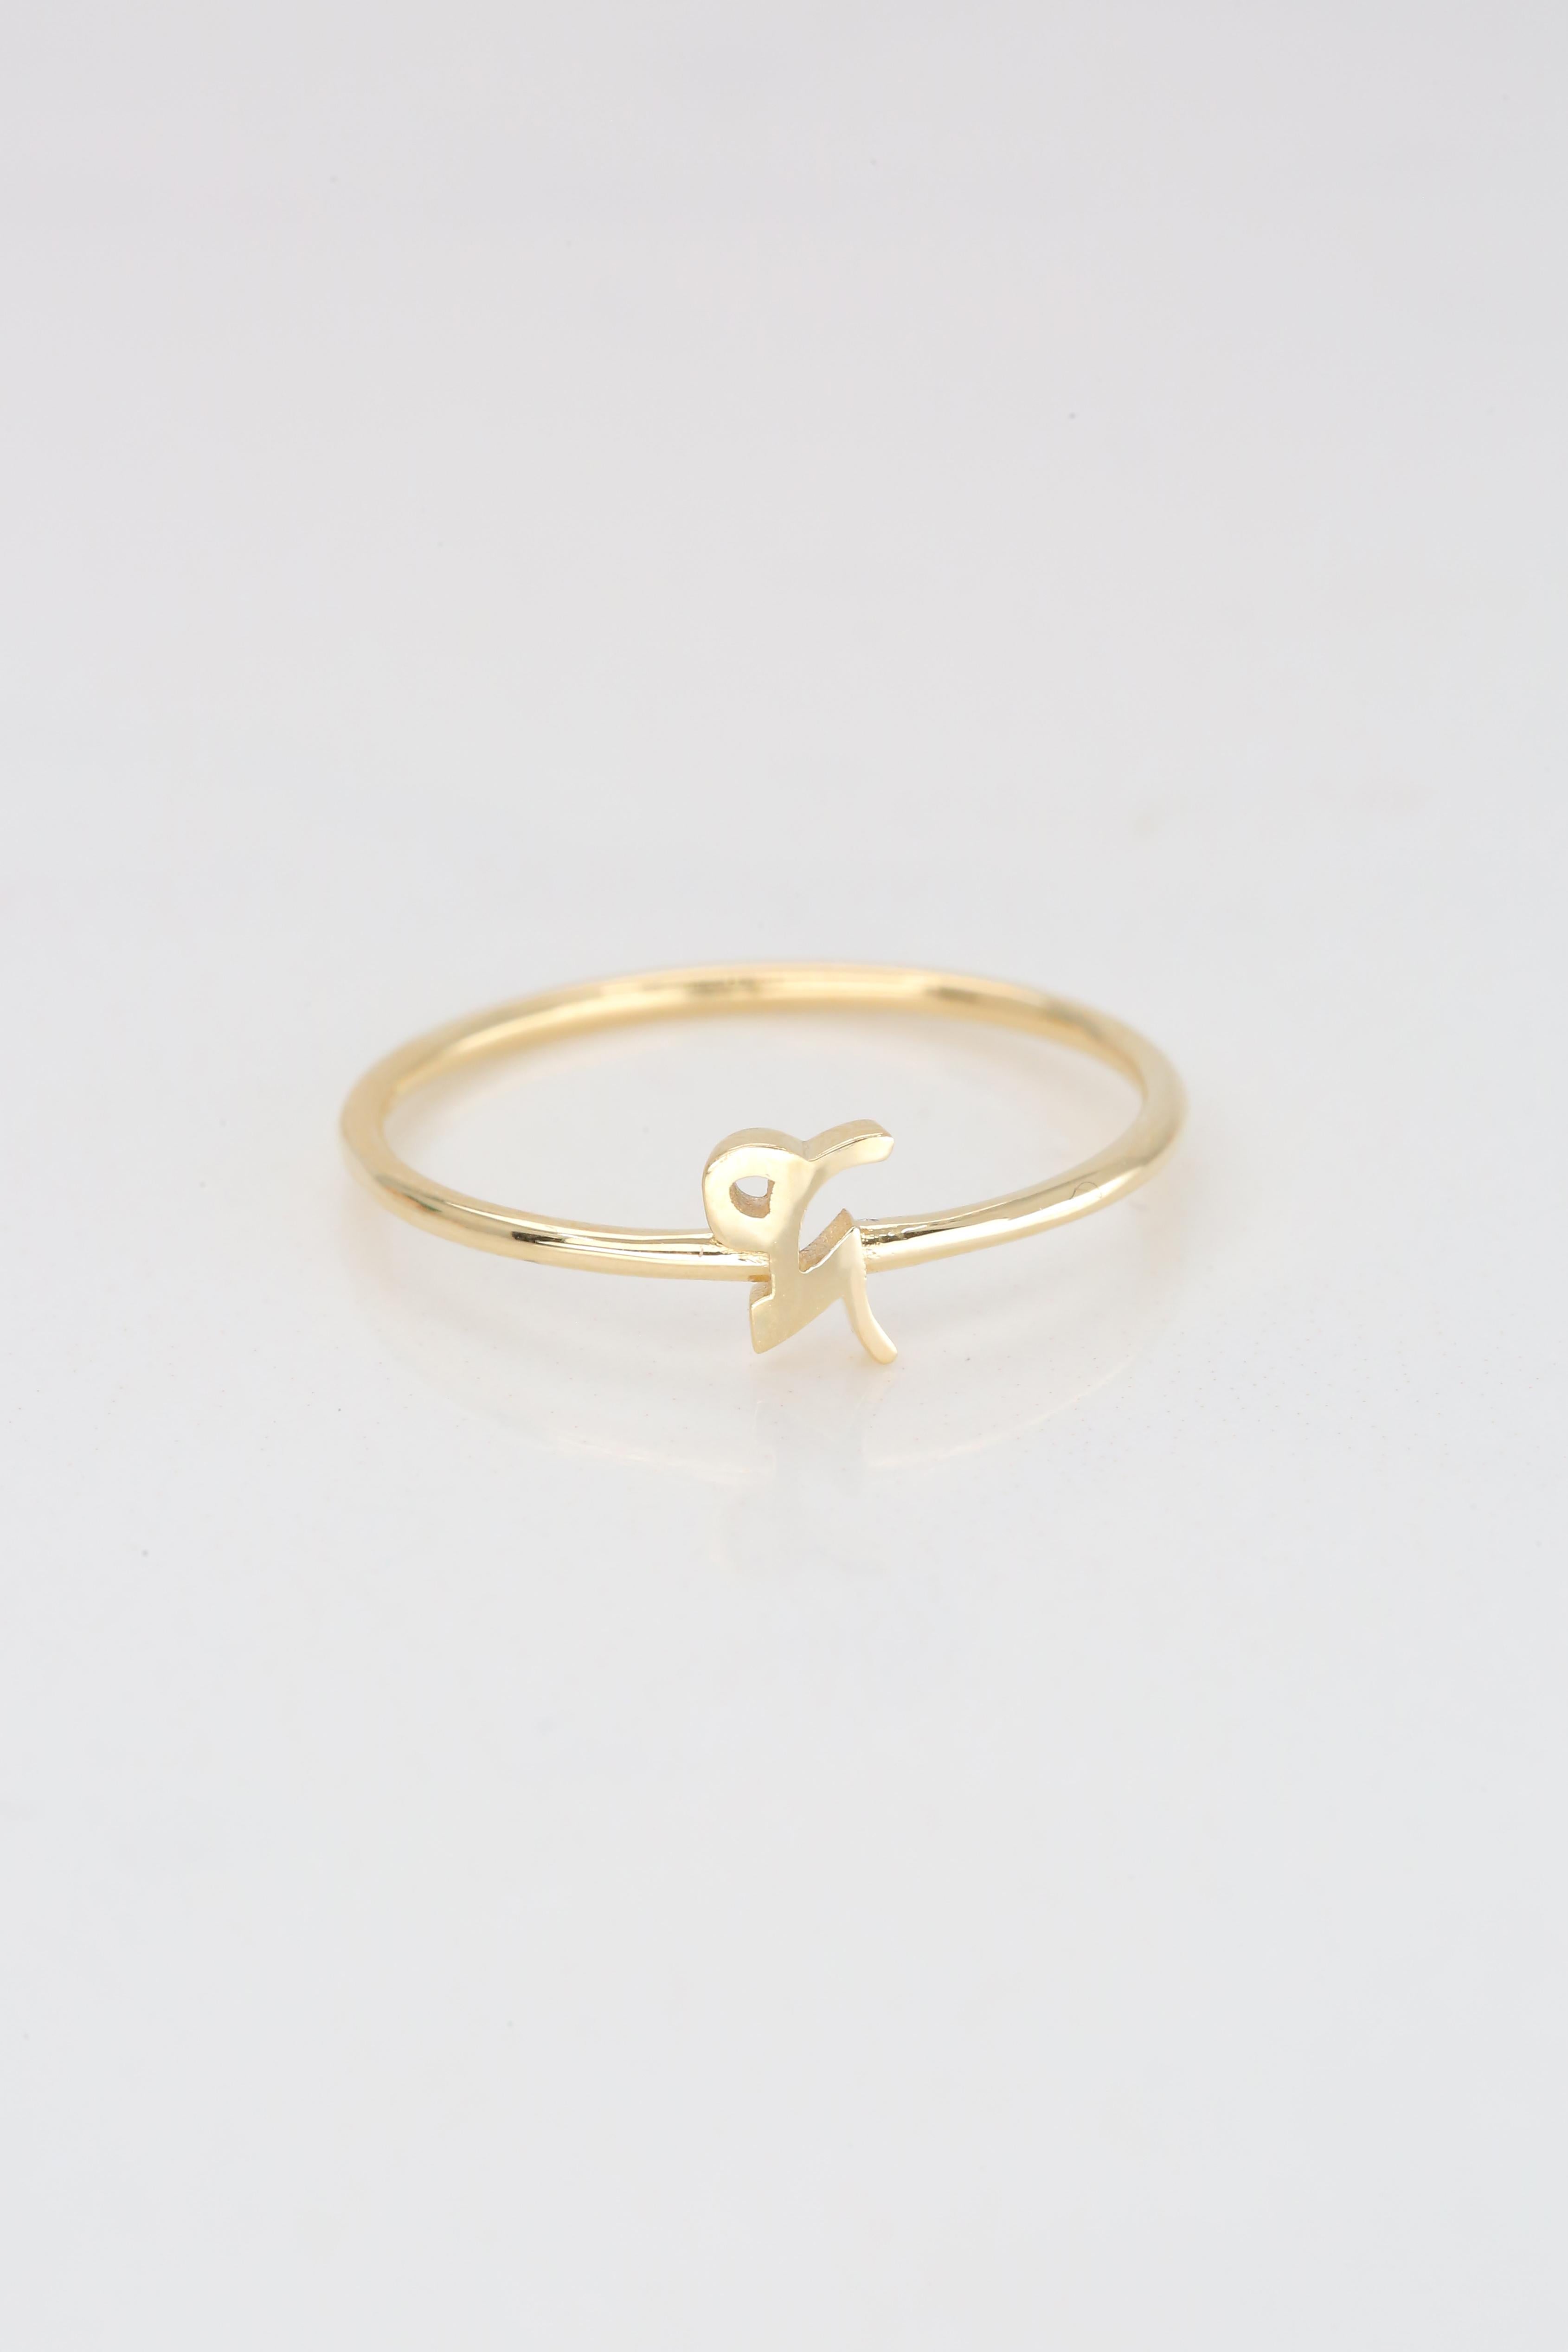 For Sale:  14K Gold Capricorn Ring, Capricorn Sign Gold Ring 5